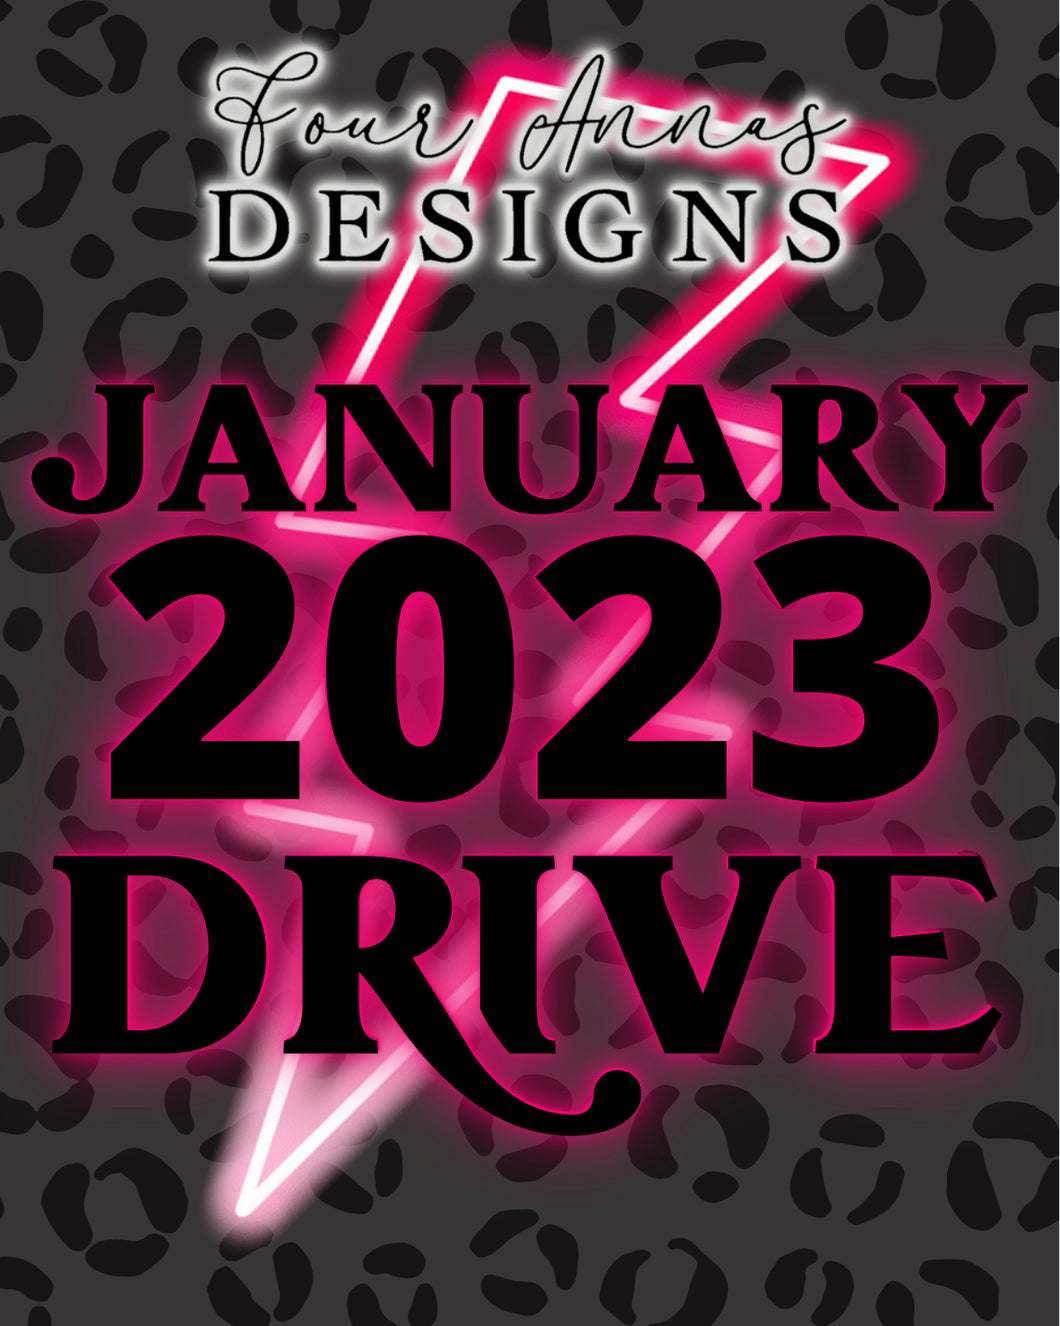 January 2023 Drive